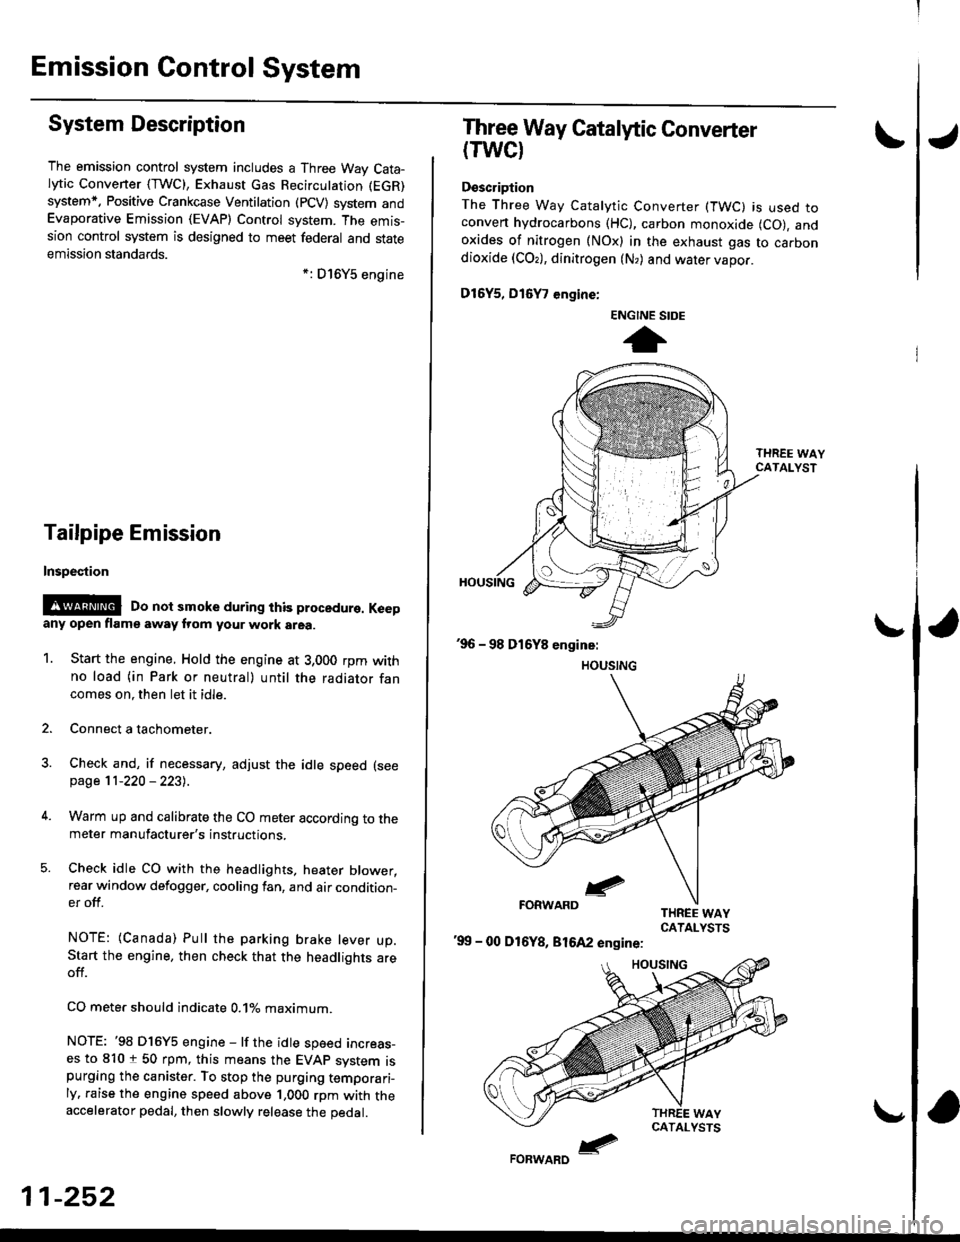 HONDA CIVIC 1999 6.G Workshop Manual Emission Gontrol System
System Description
The emission control system includes a Three Way Cata-lytic Convener (TWC), Exhaust Gas Recirculation (EGR)
system,. Positive Crankcase Ventilation (pCV) sys